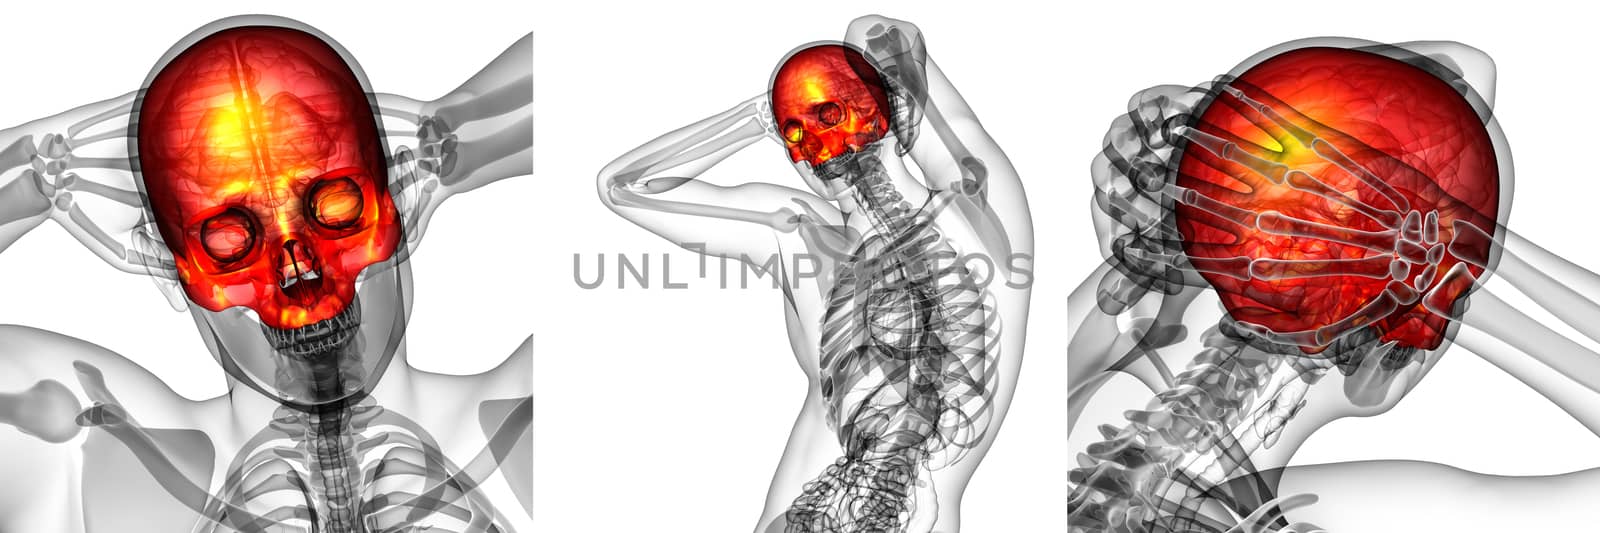 3d rendering medical illustration of the upper skull 